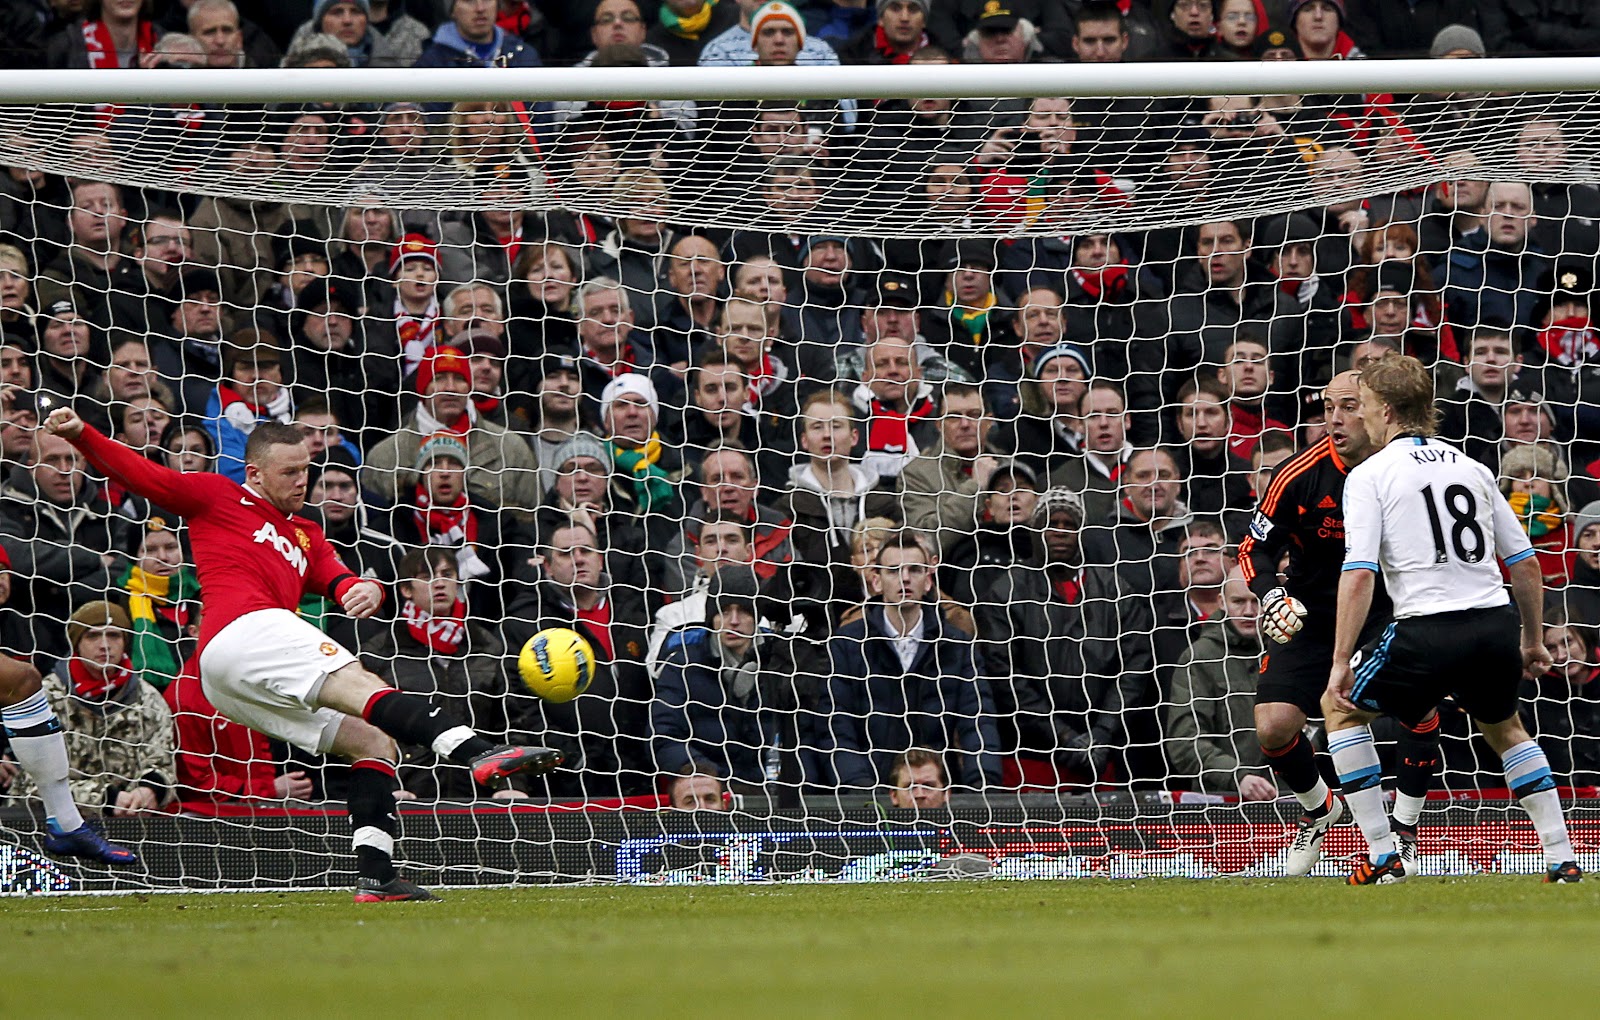 http://3.bp.blogspot.com/-MPsh4itP-MA/Tz70p9sx5uI/AAAAAAAABSc/4bRBaNCl71c/s1600/Manchester+United+vs+Liverpool+epl+feb+2012+Wayne+Rooney+volley+goal.jpg